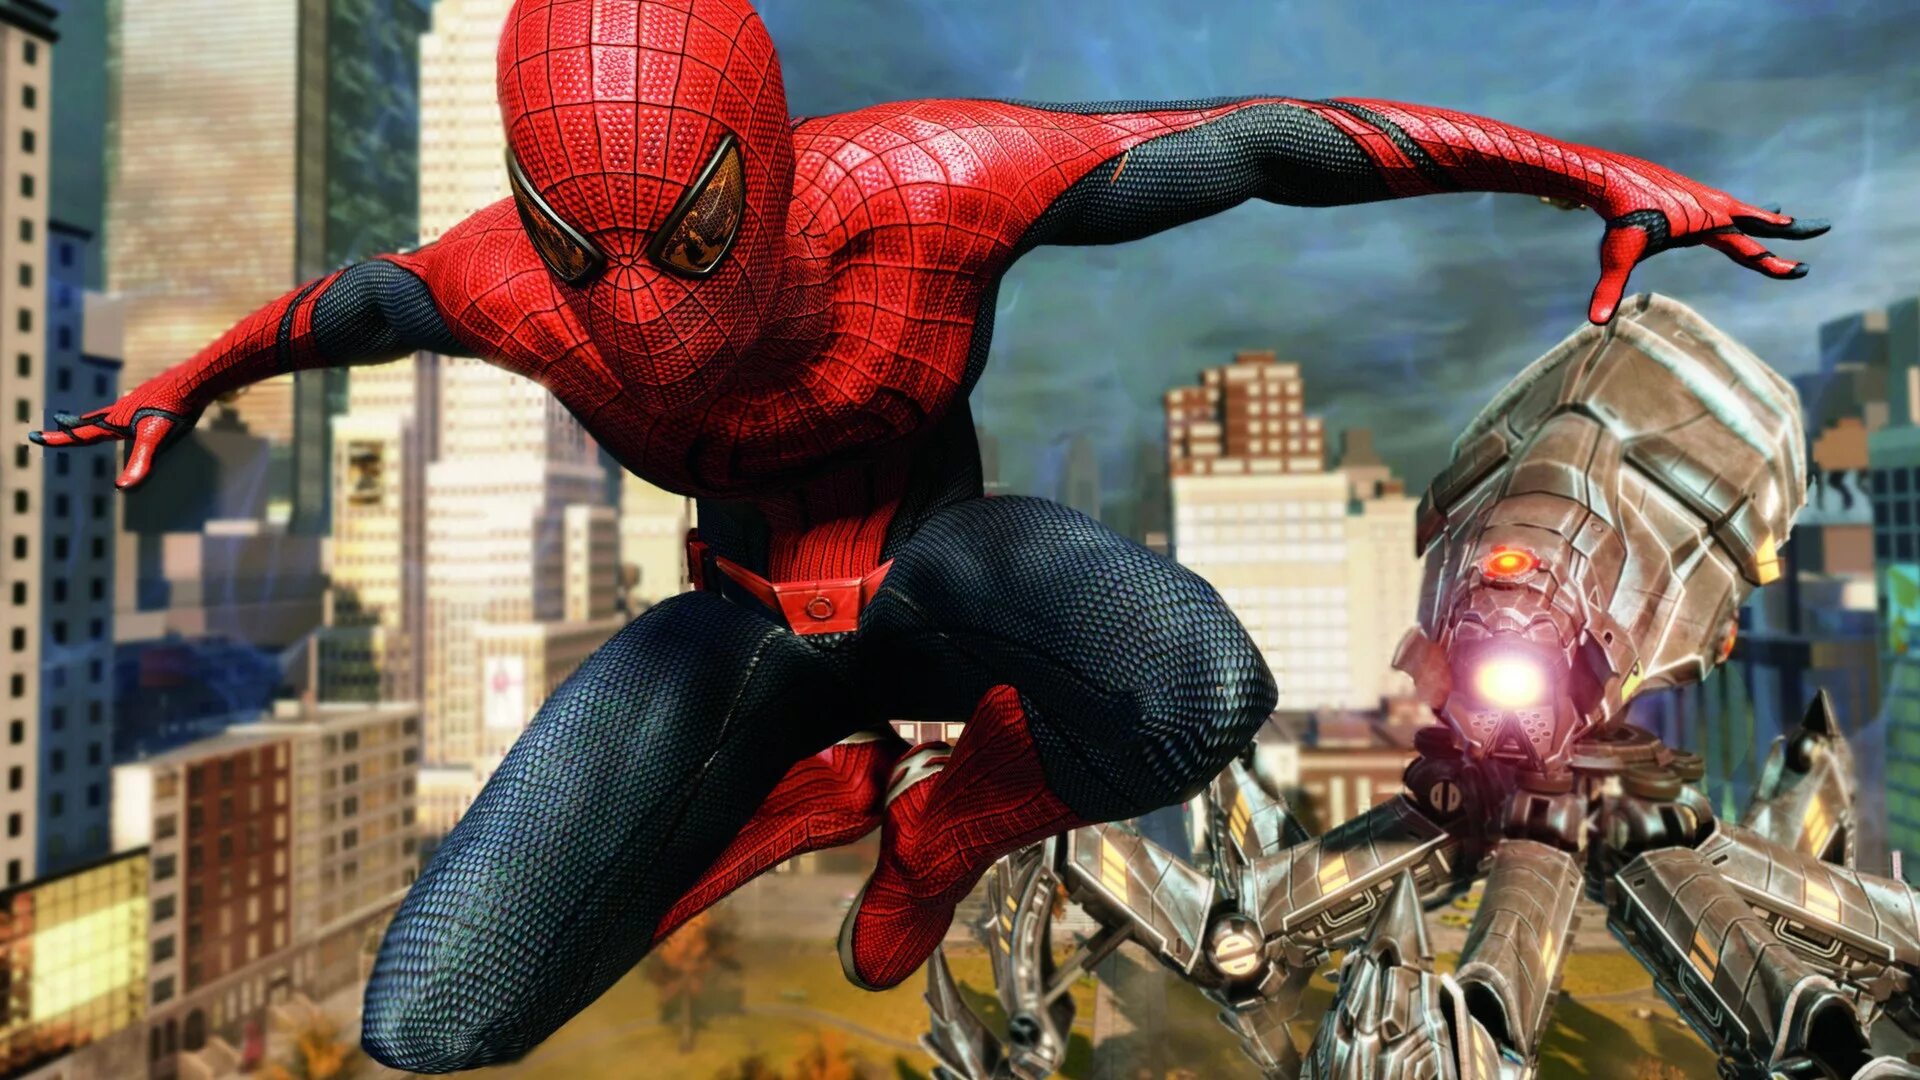 Spider man game pc. The amazing Spider-man (игра, 2012). Эмейзинг человек паук 1. Человек паук амазинг игра. Spider man 2012 игра.